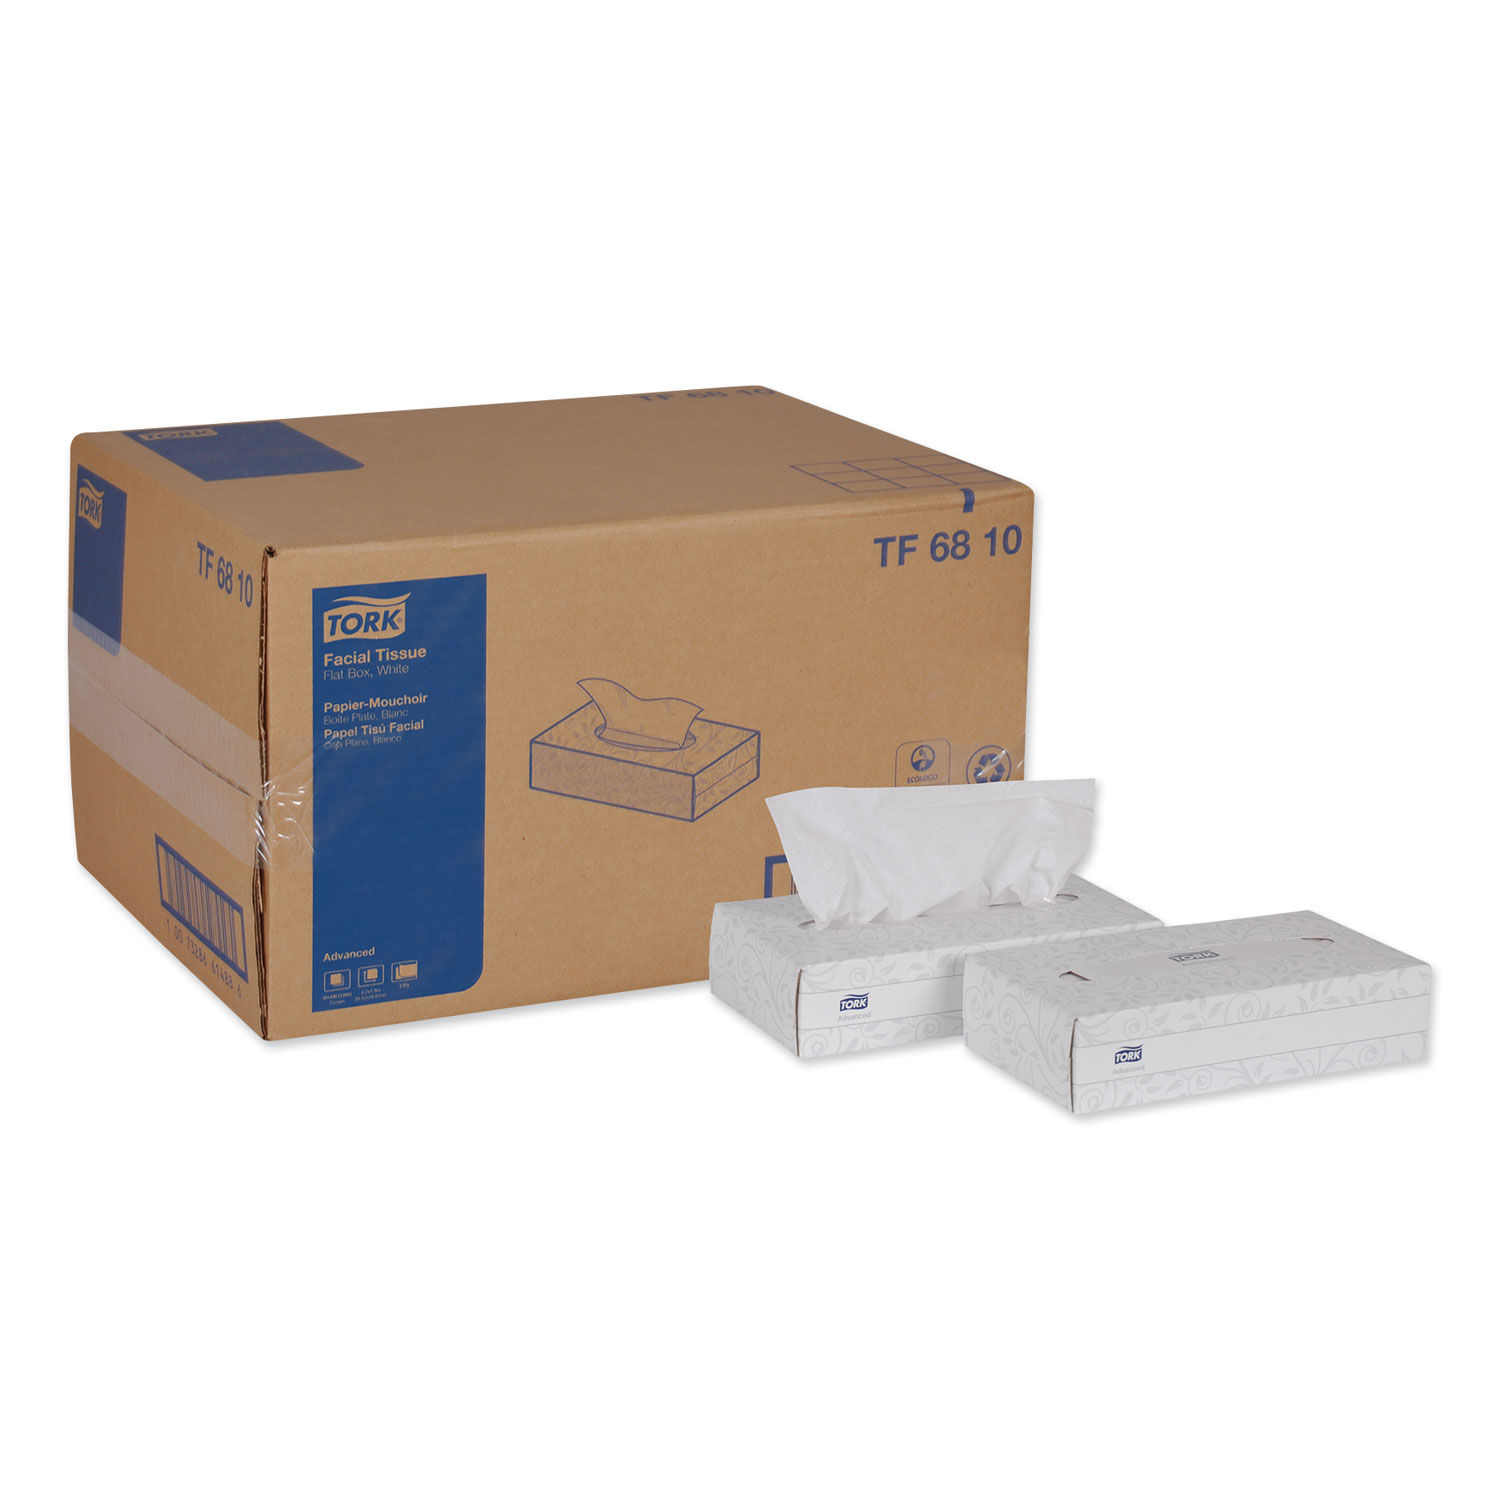 Advanced Facial Tissue 2-Ply, White, Flat Box, 100 Sheets/Box, 30 Boxes/Carton